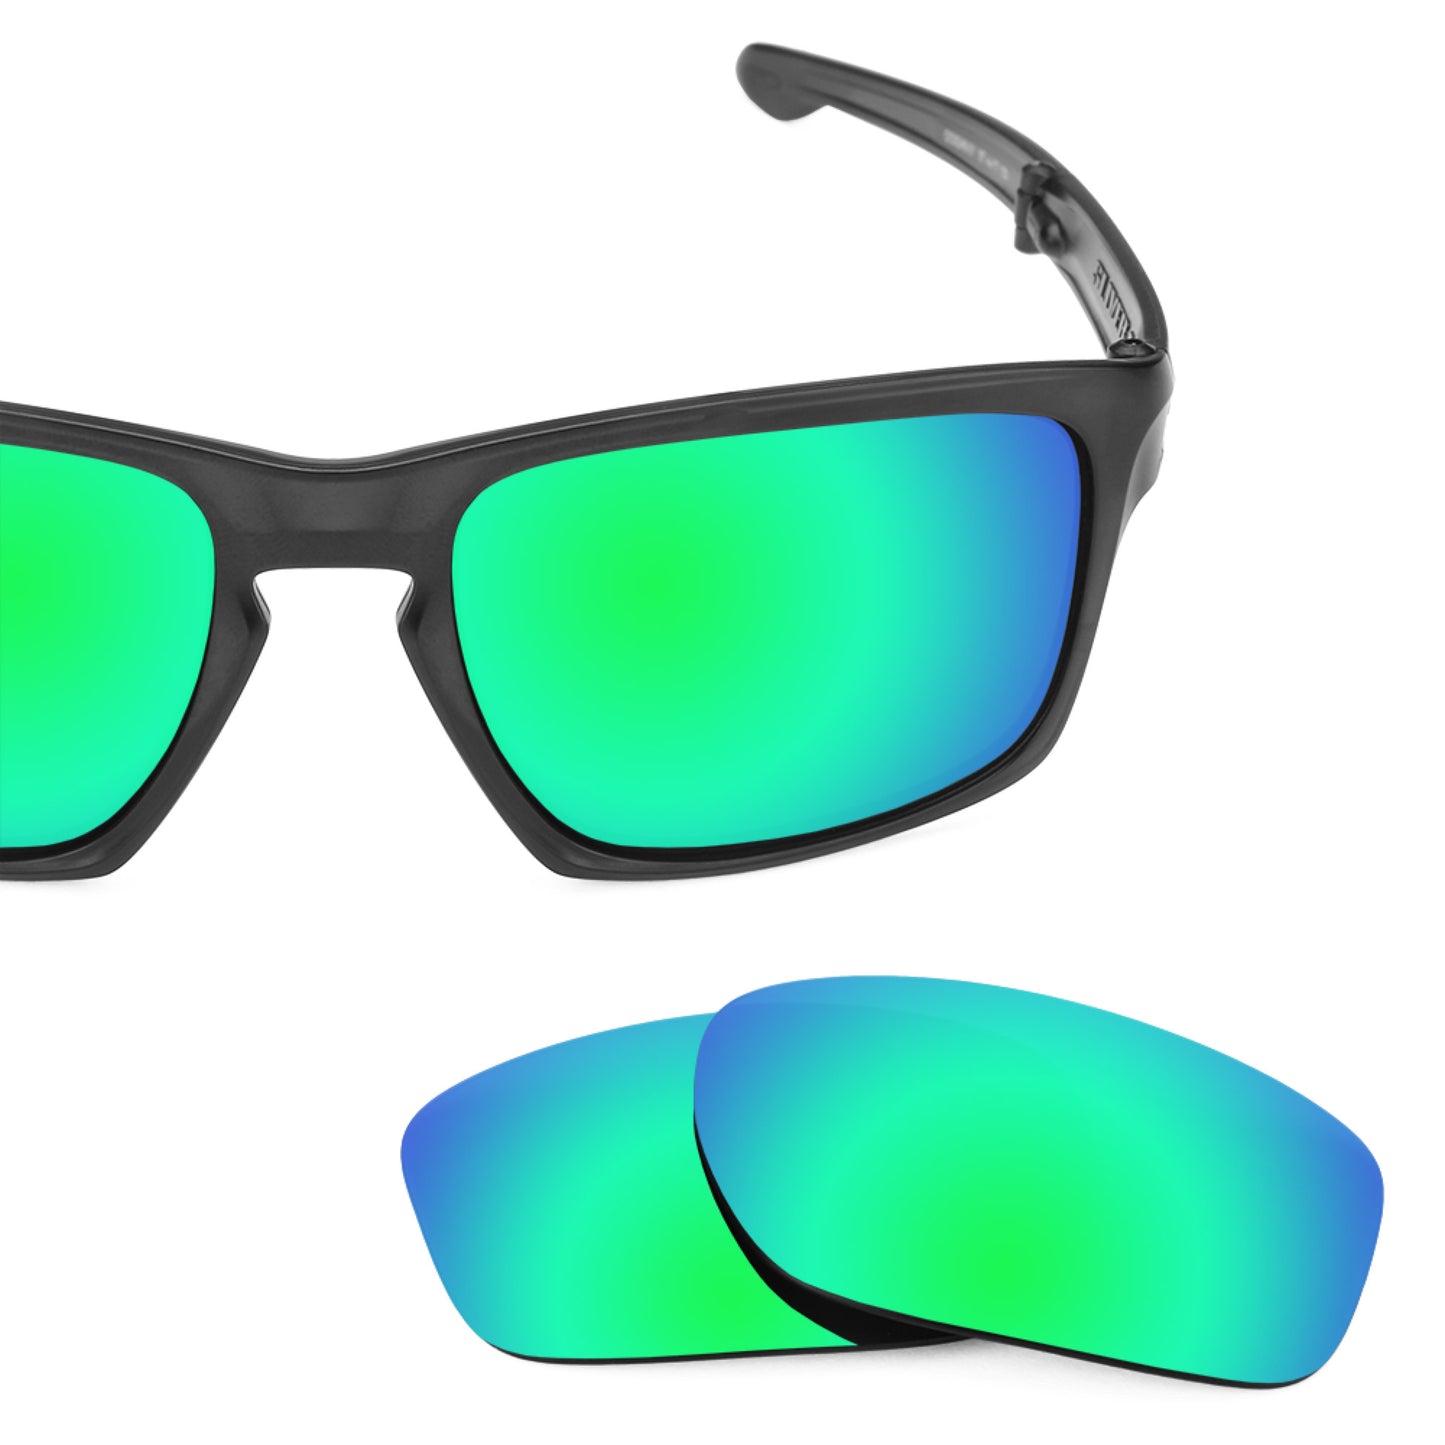 Revant replacement lenses for Oakley Sliver F Non-Polarized Emerald Green